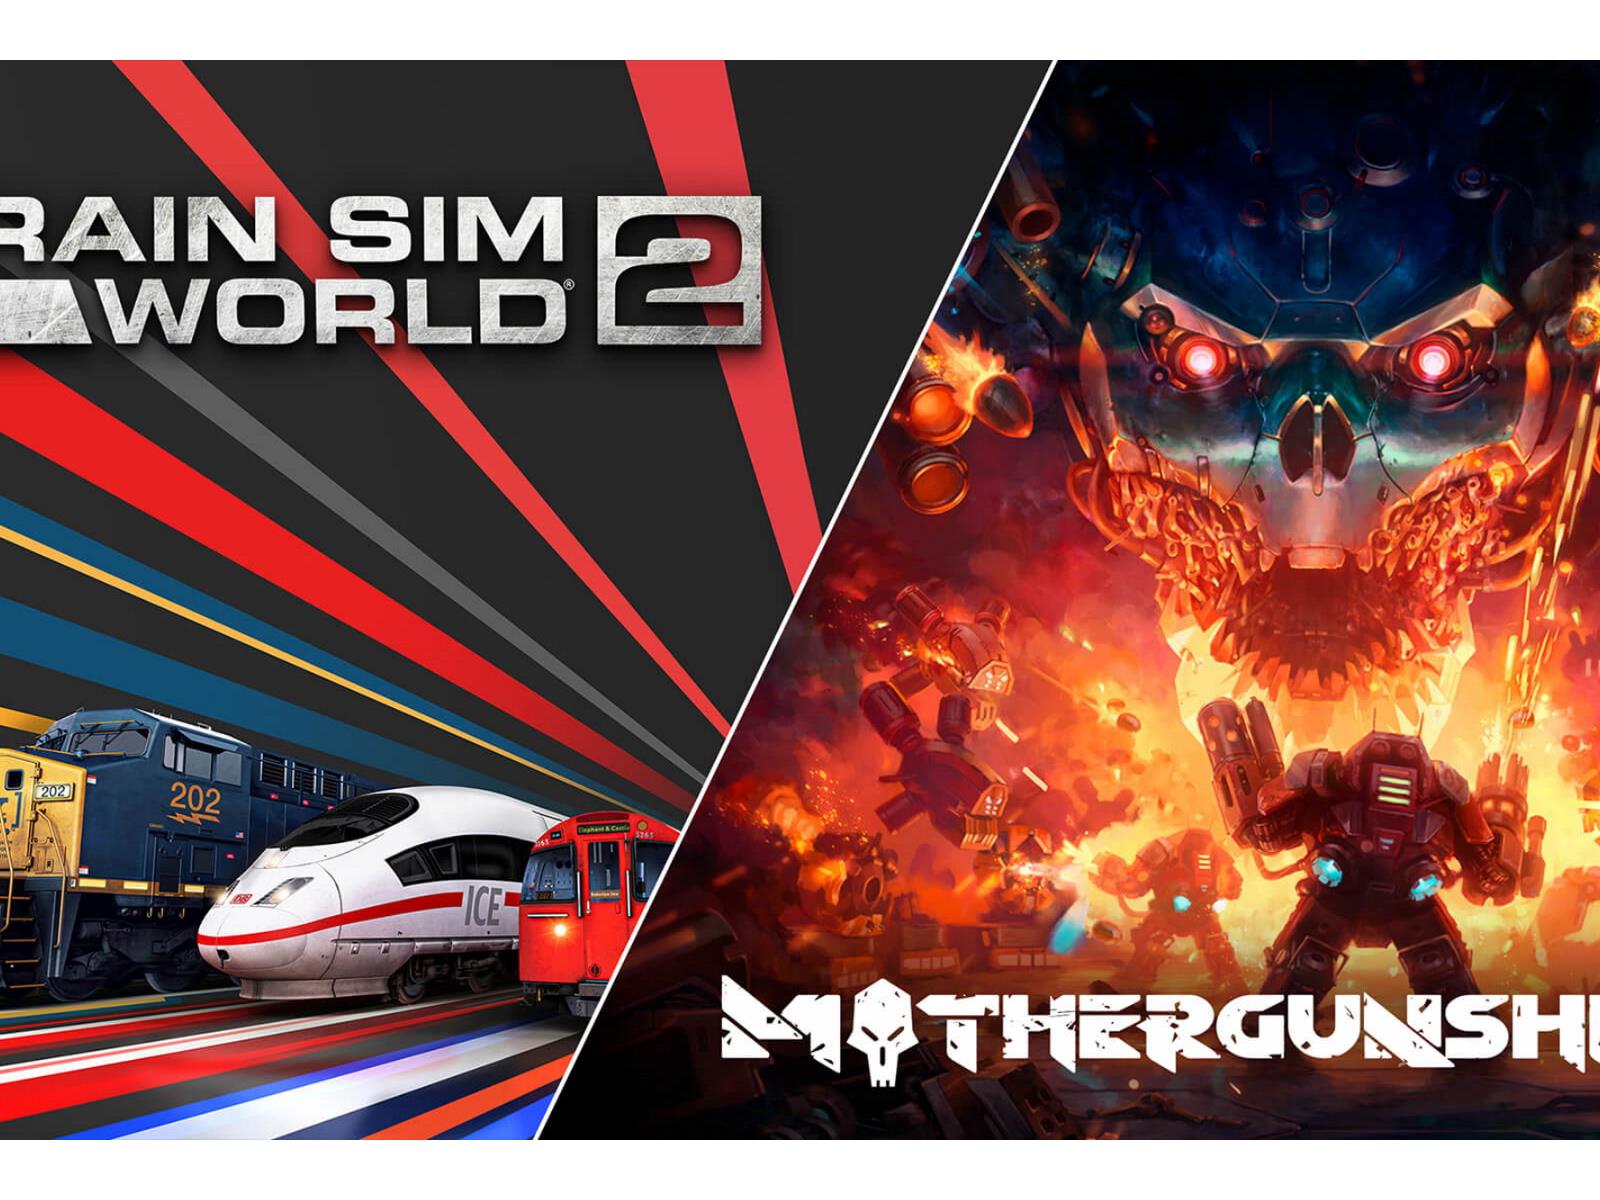 Free This Week: MOTHERGUNSHIP and Train Sim World 2 - Epic Games Store